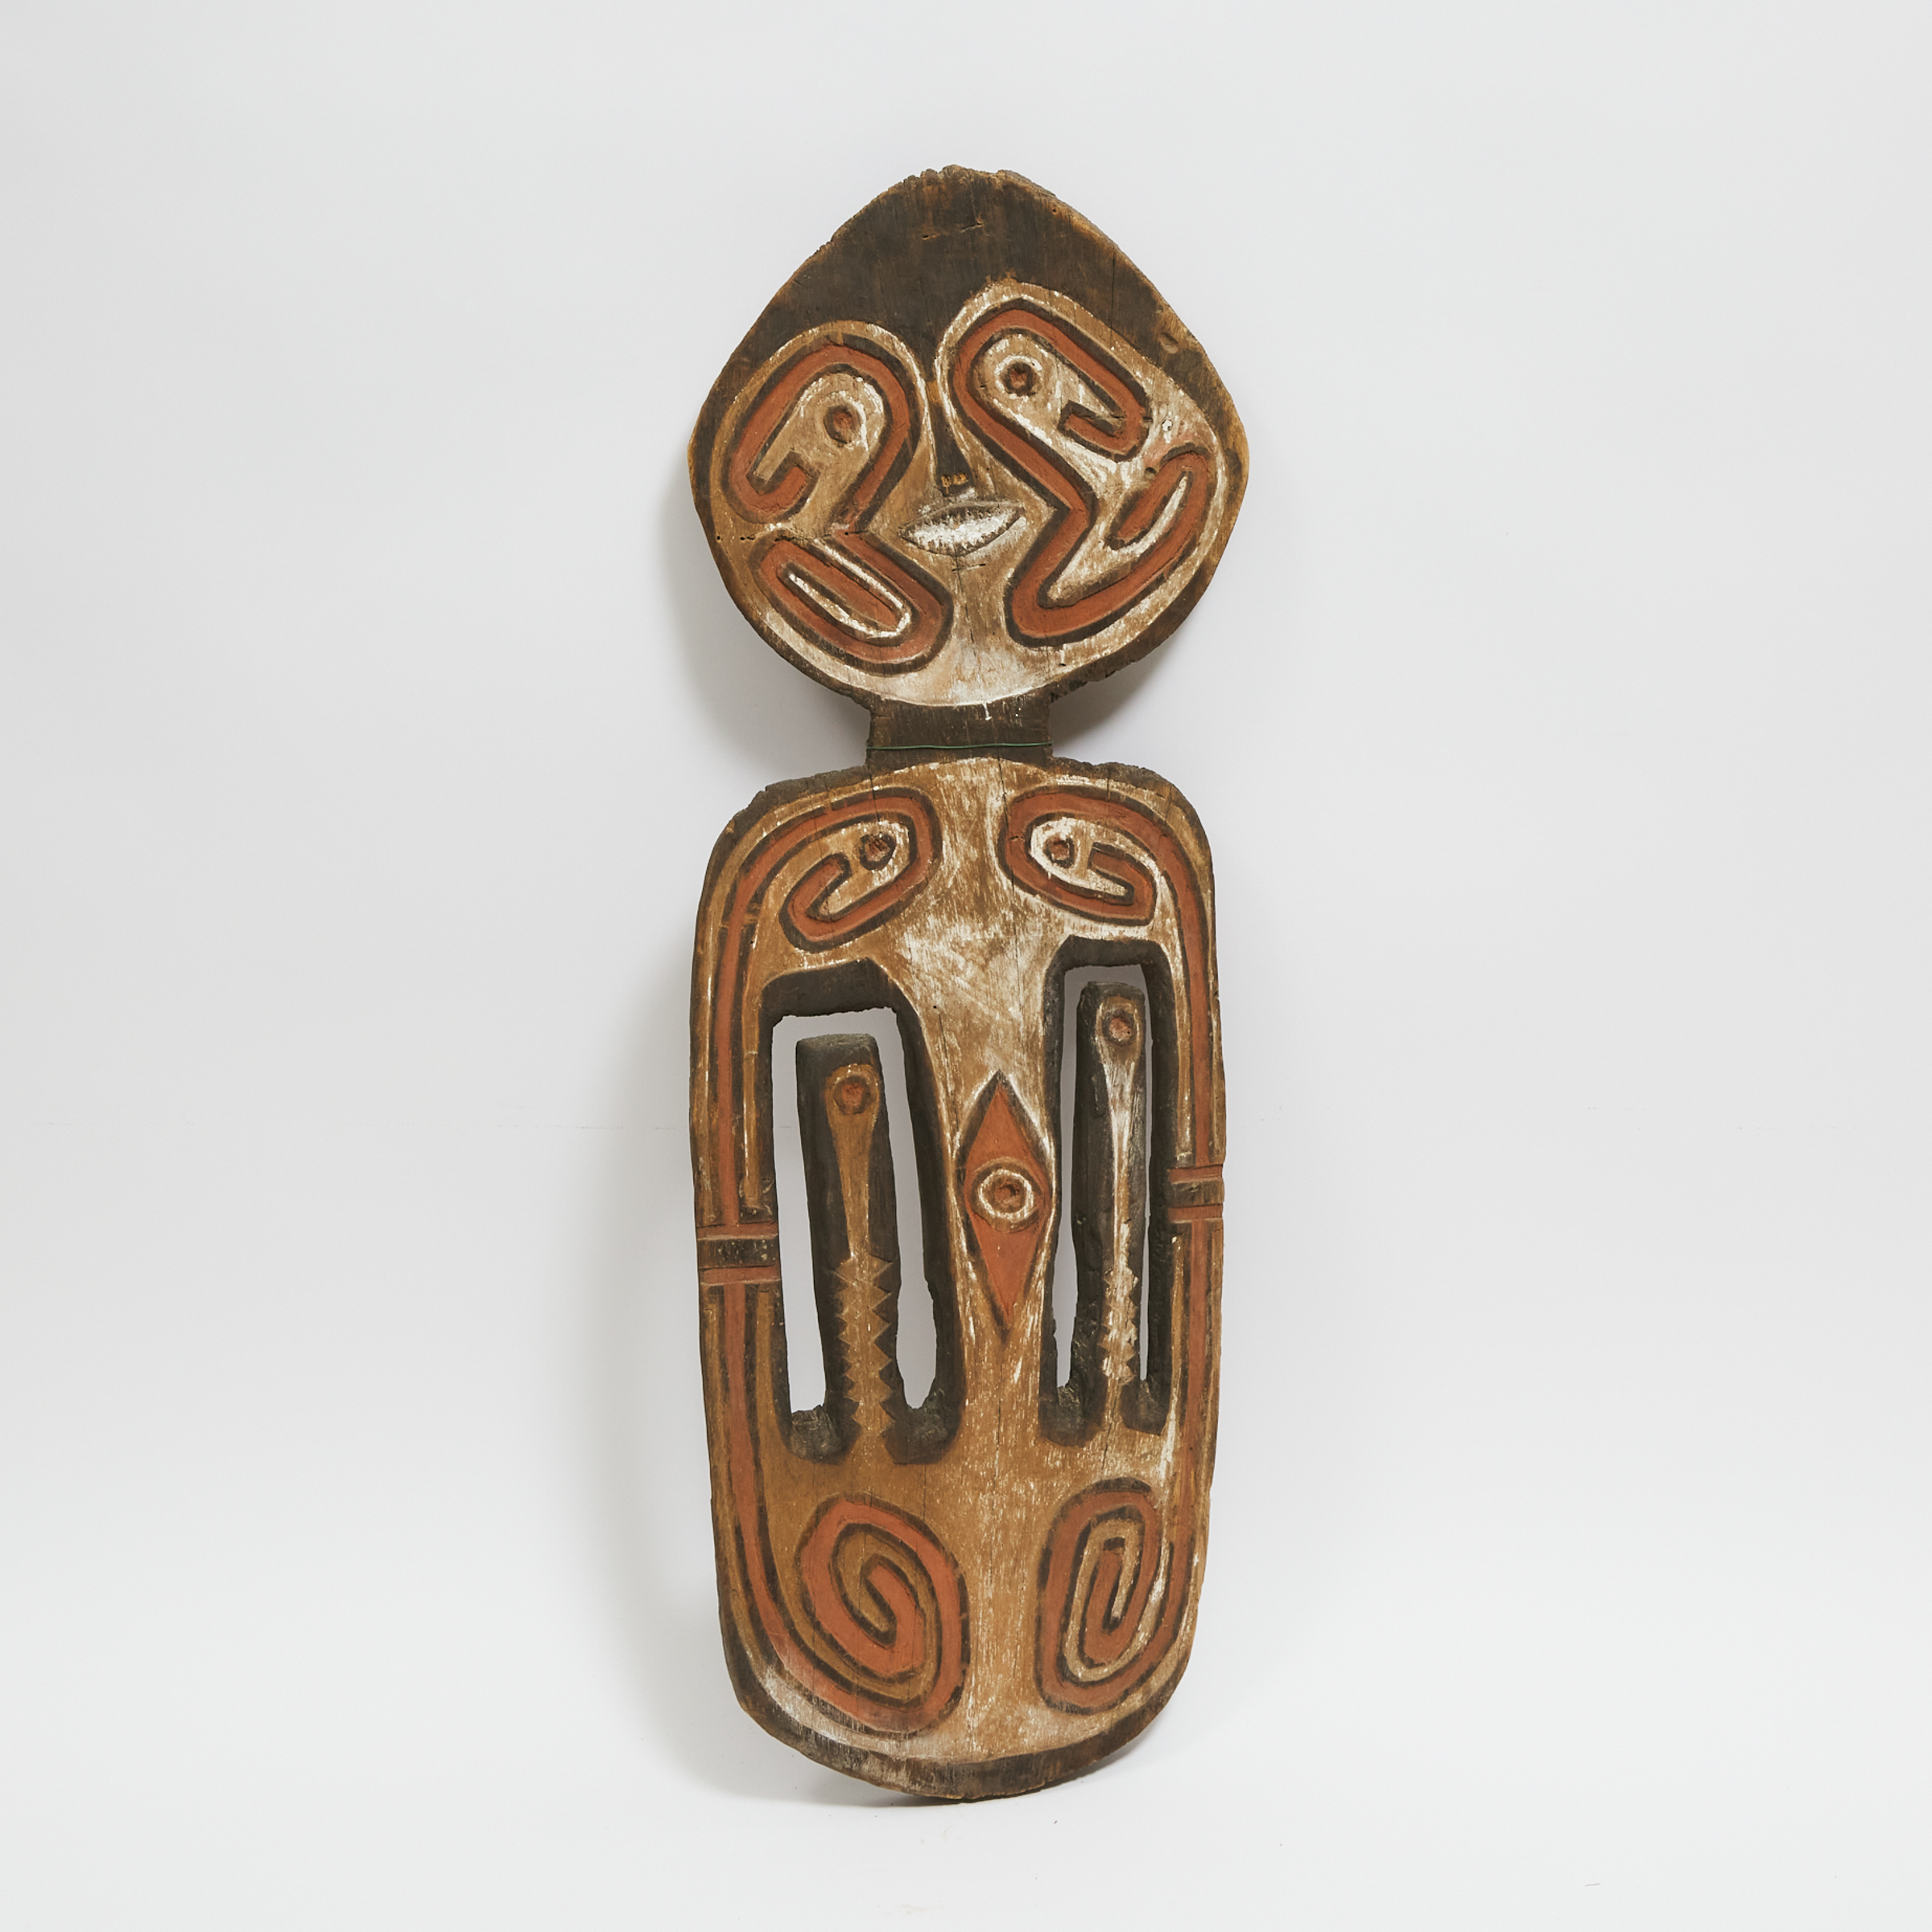 Large Agiba or "Skull Hook" Figure, Kerewa People, Papuan Gulf, Papua New Guinea, mid 20th century